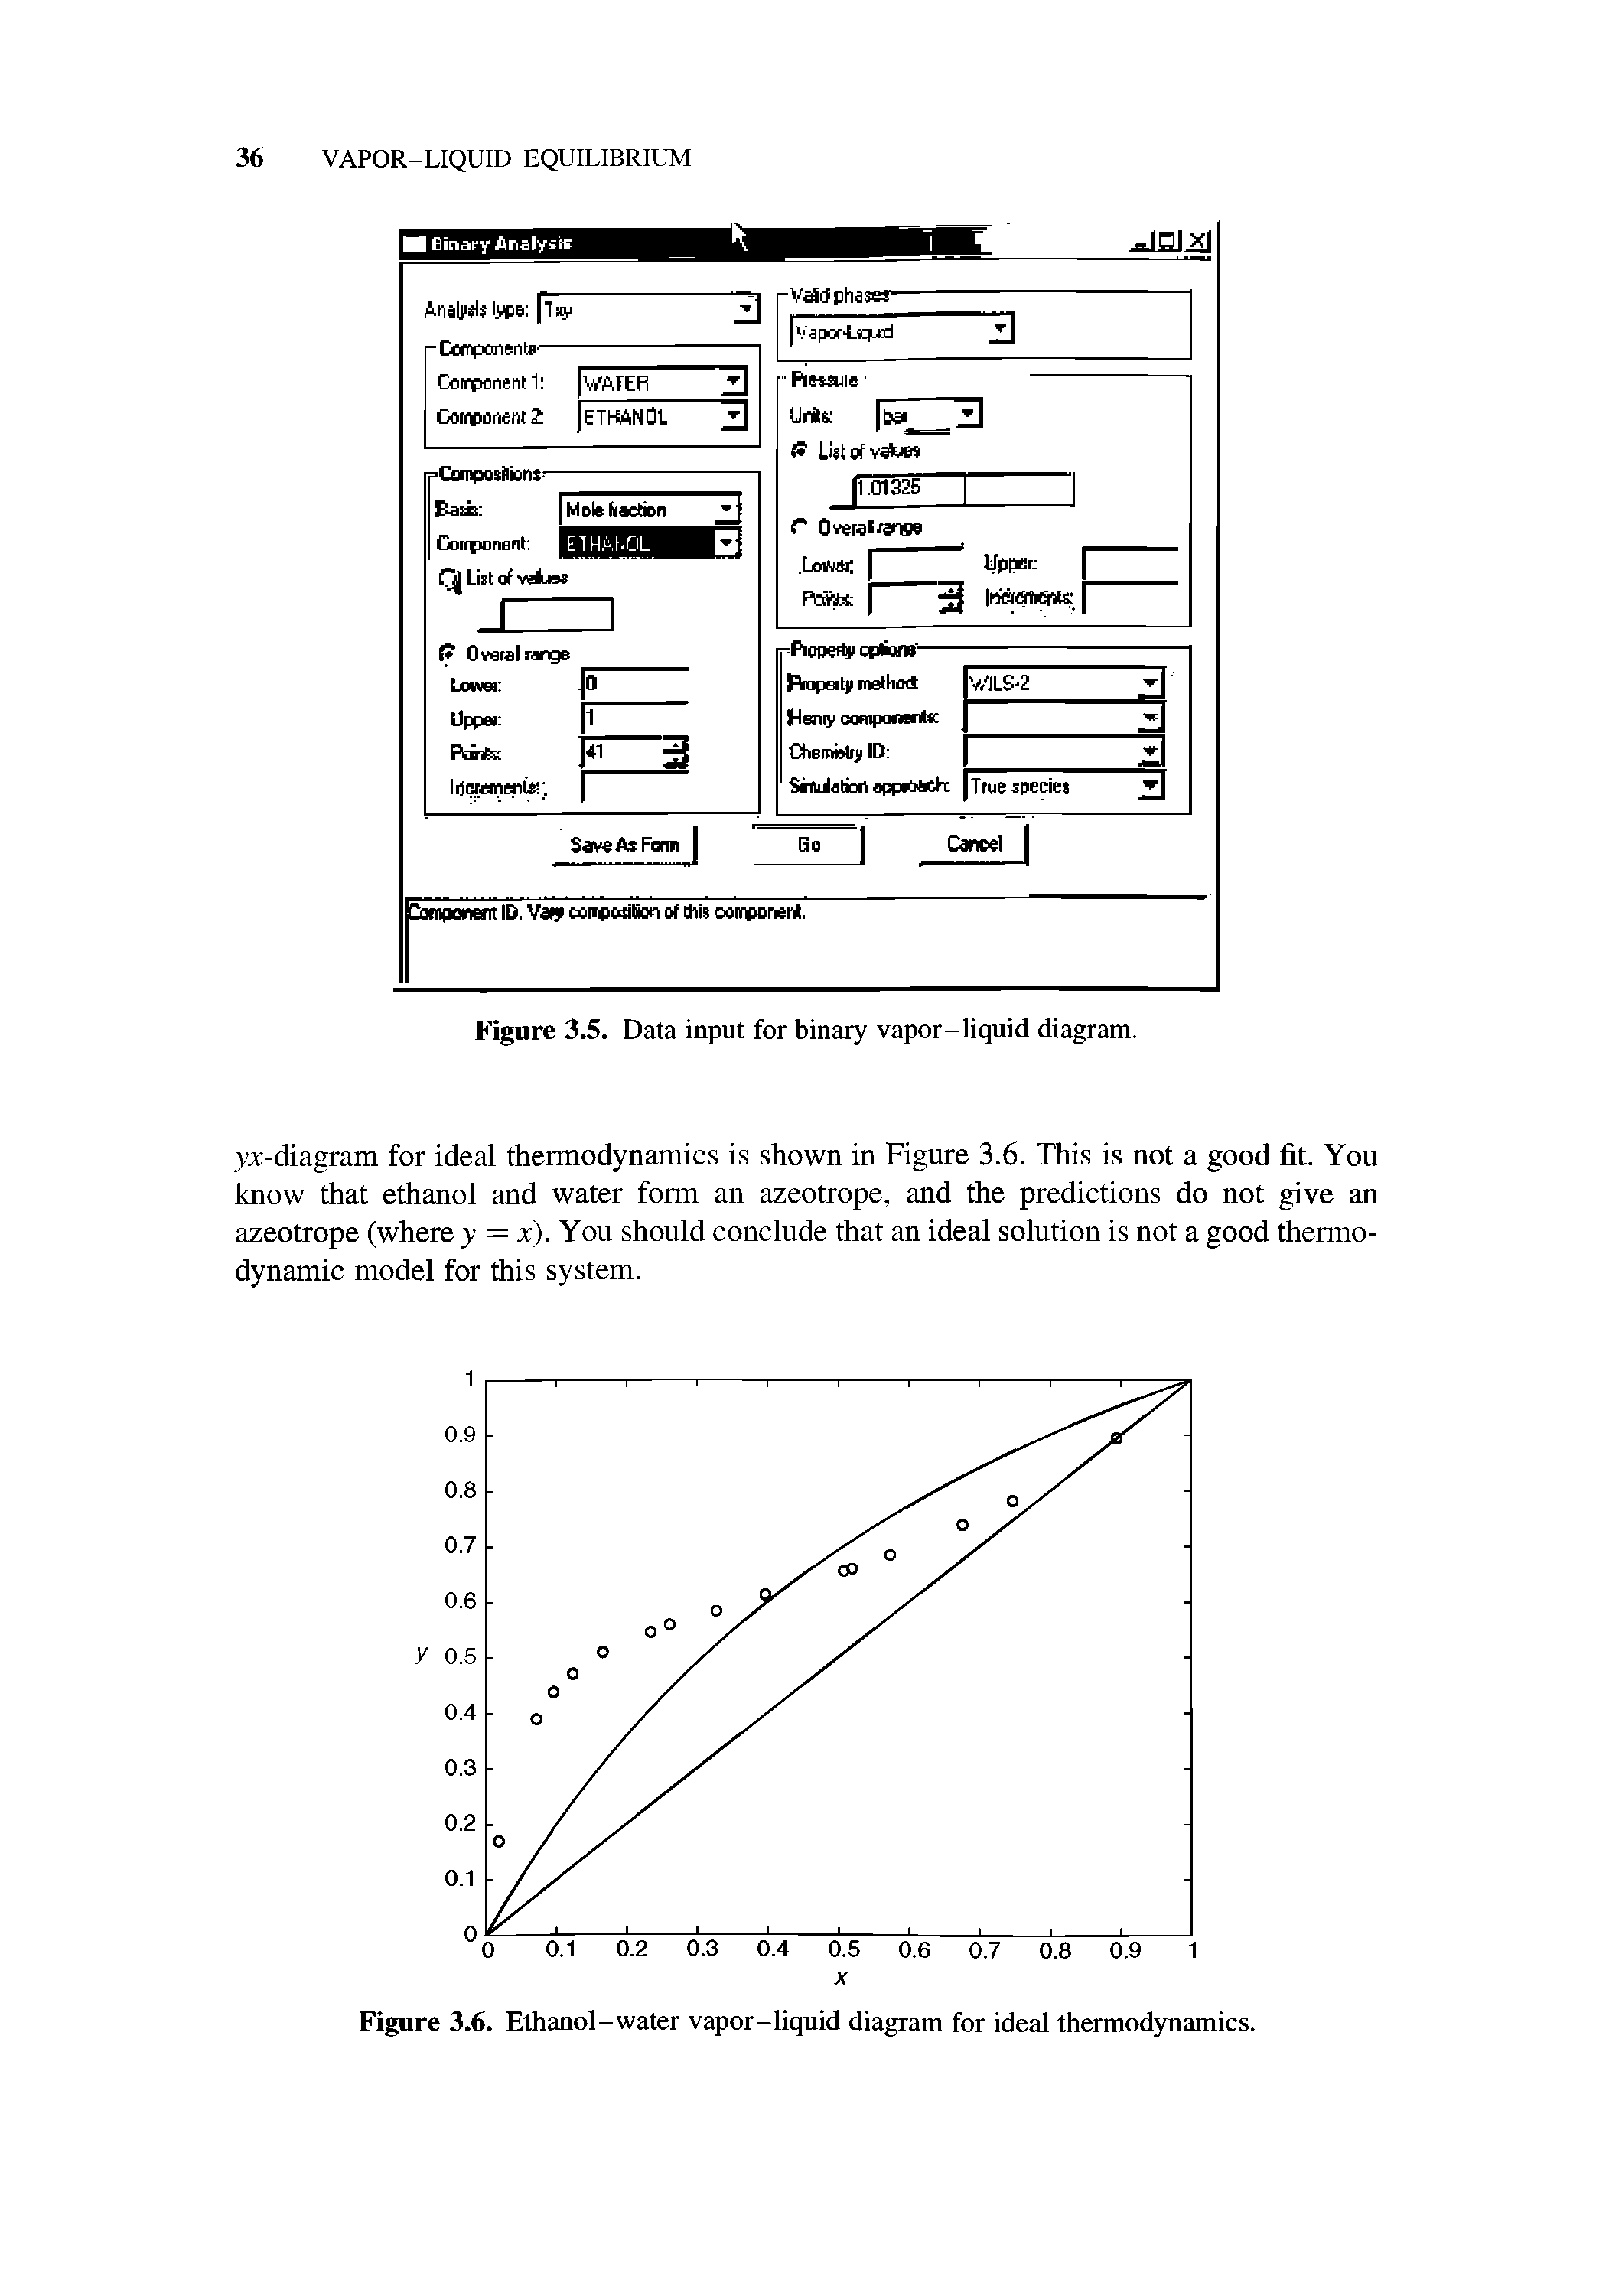 Figure 3.6. Ethanol-water vapor-liquid diagram for ideal thermodynamics.